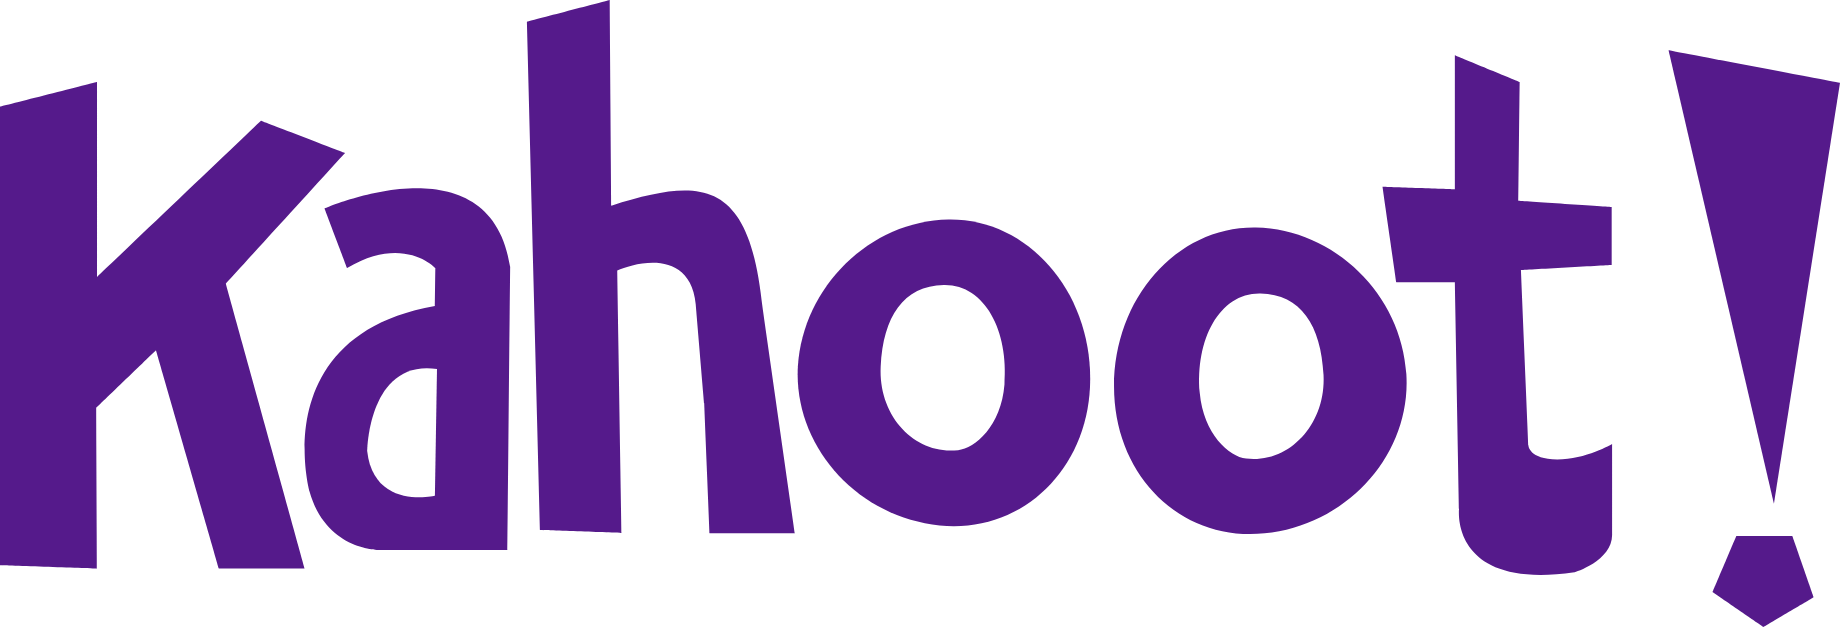 Kahoot! logo in transparent PNG format